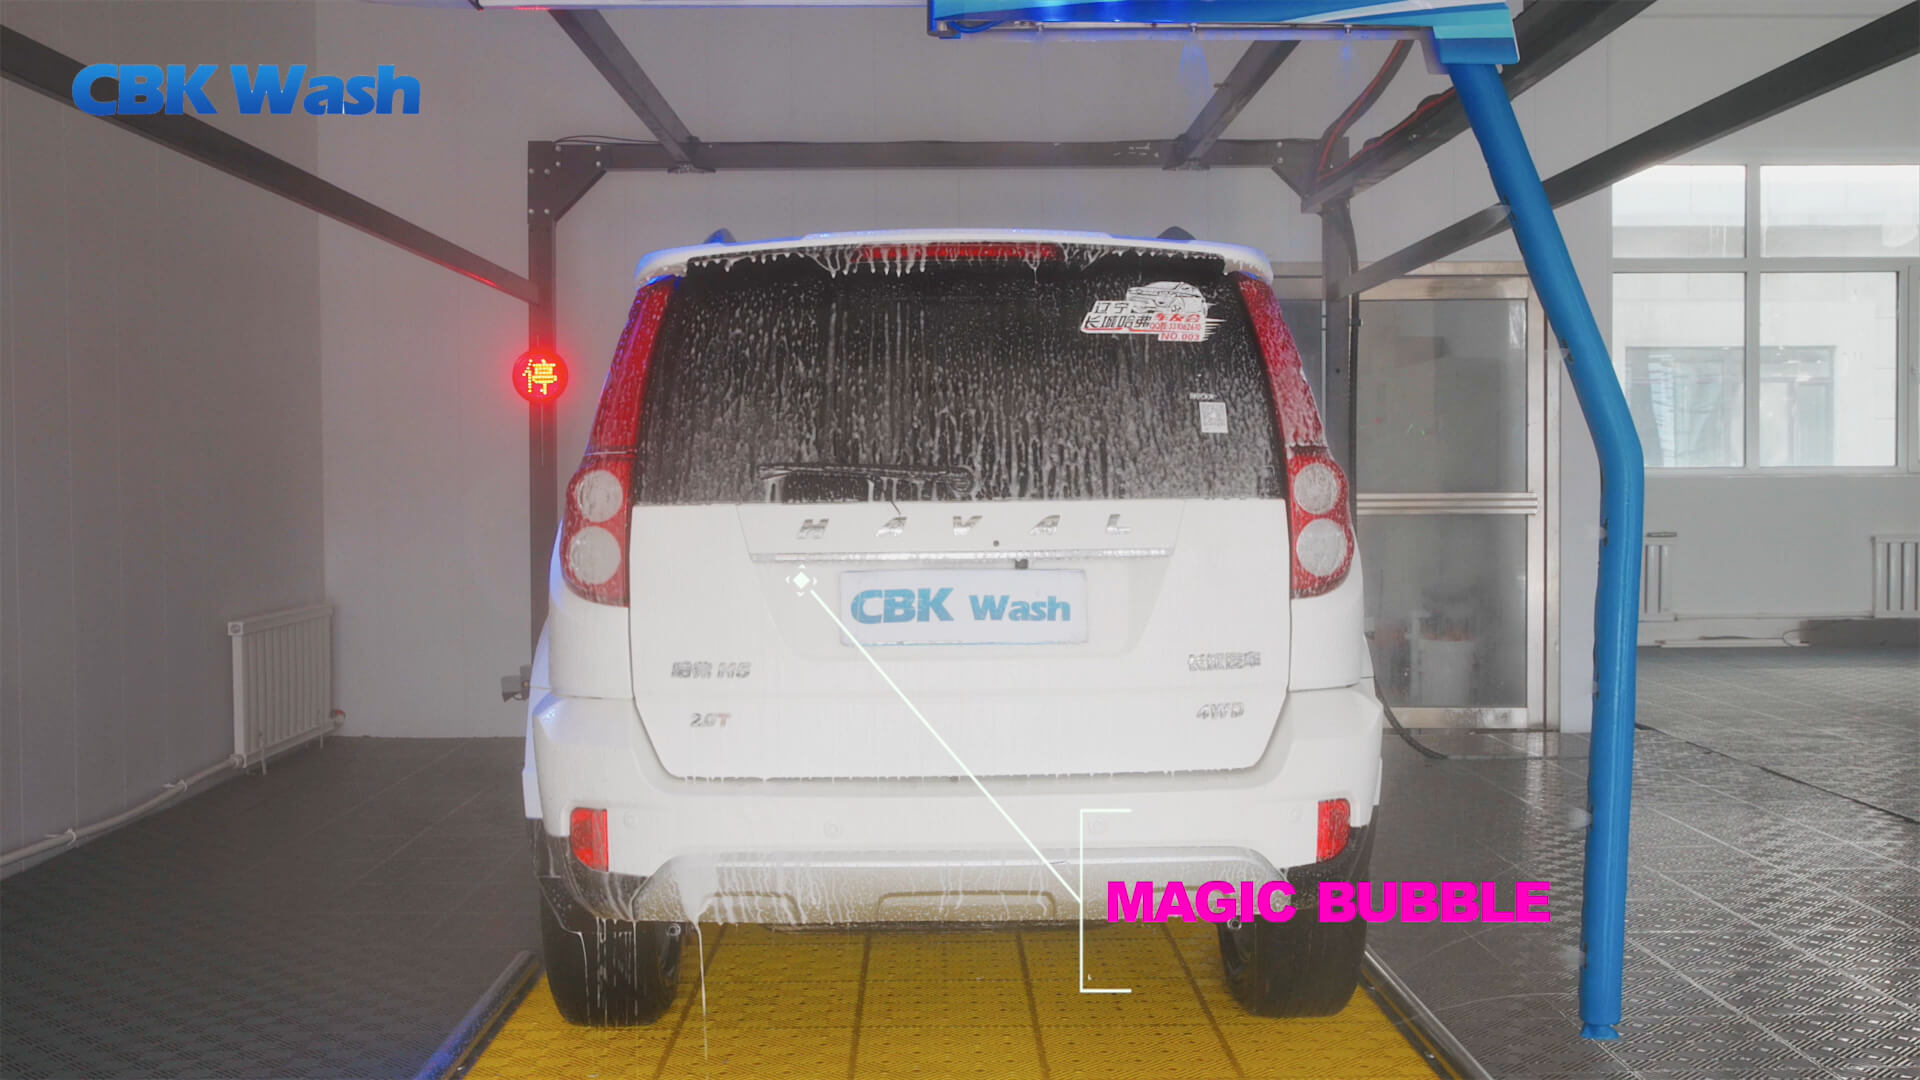 China China Wholesale Car Wash Machine Company – CBK 108 intelligent  touchless robot car wash machine – CBK Manufacture and Factory